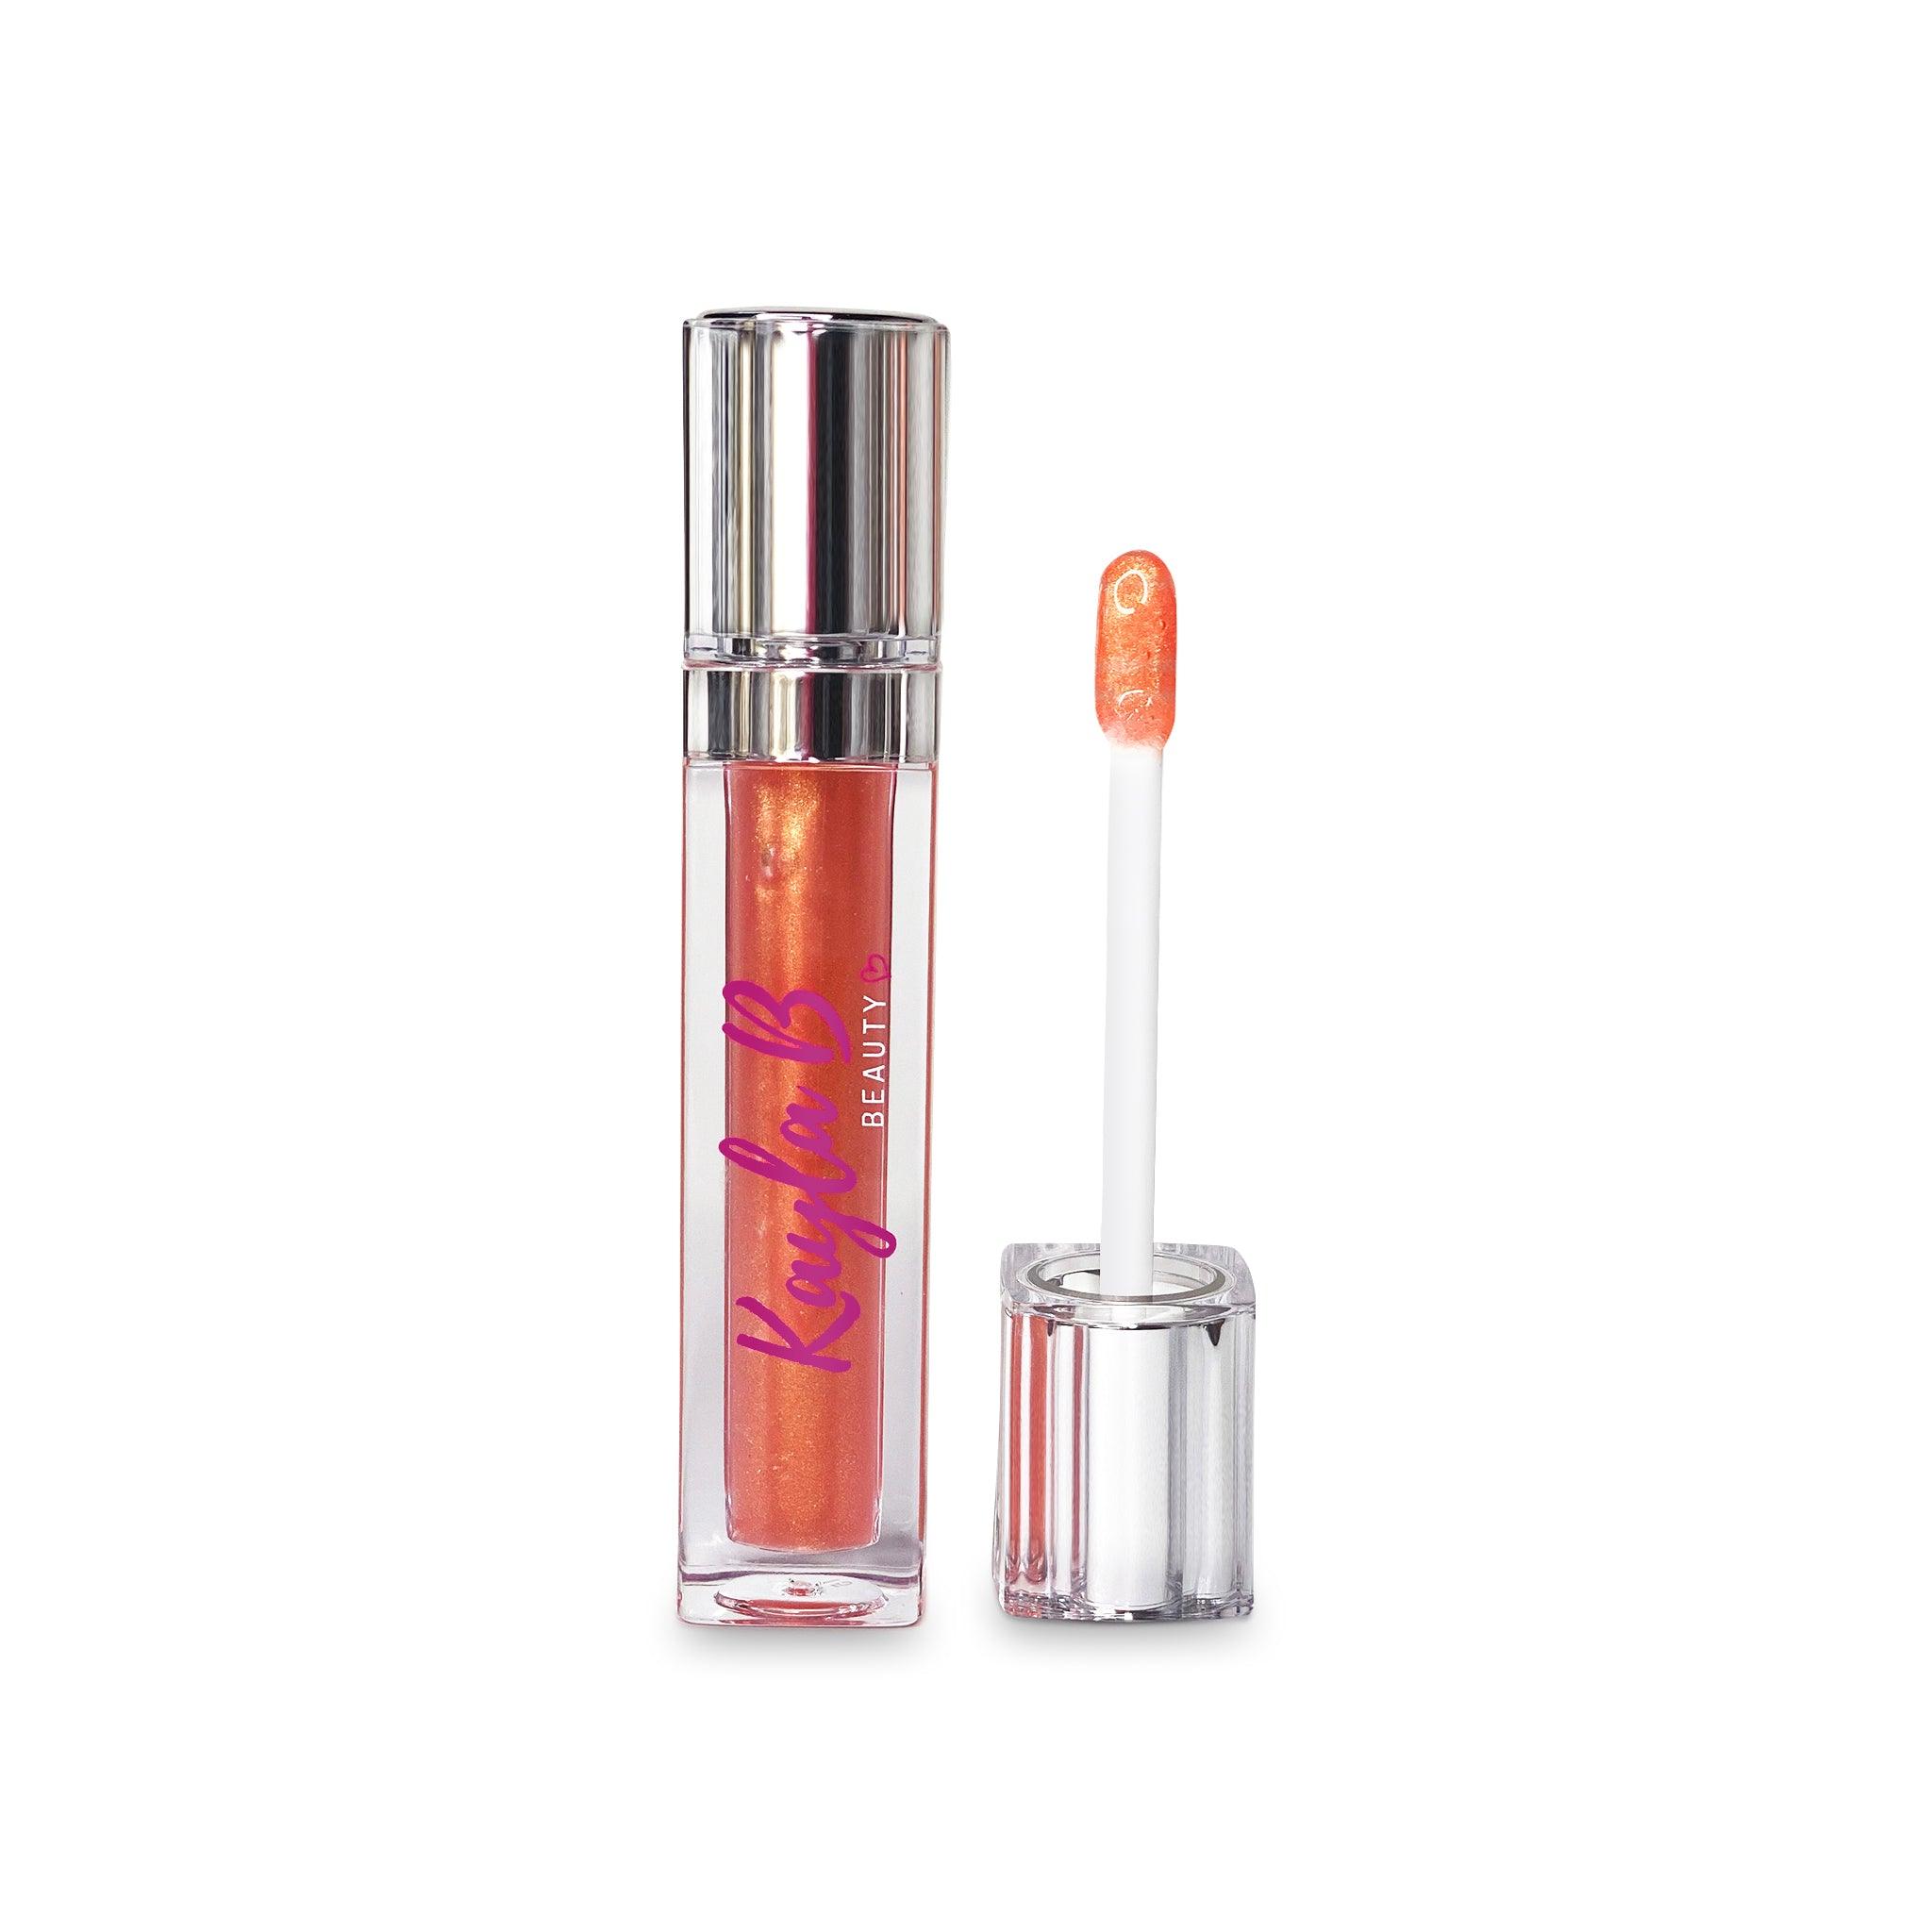 Blossom - Kayla B Beauty - Blossom Lip Gloss, Clear Lip Gloss, Flavored Lip Gloss